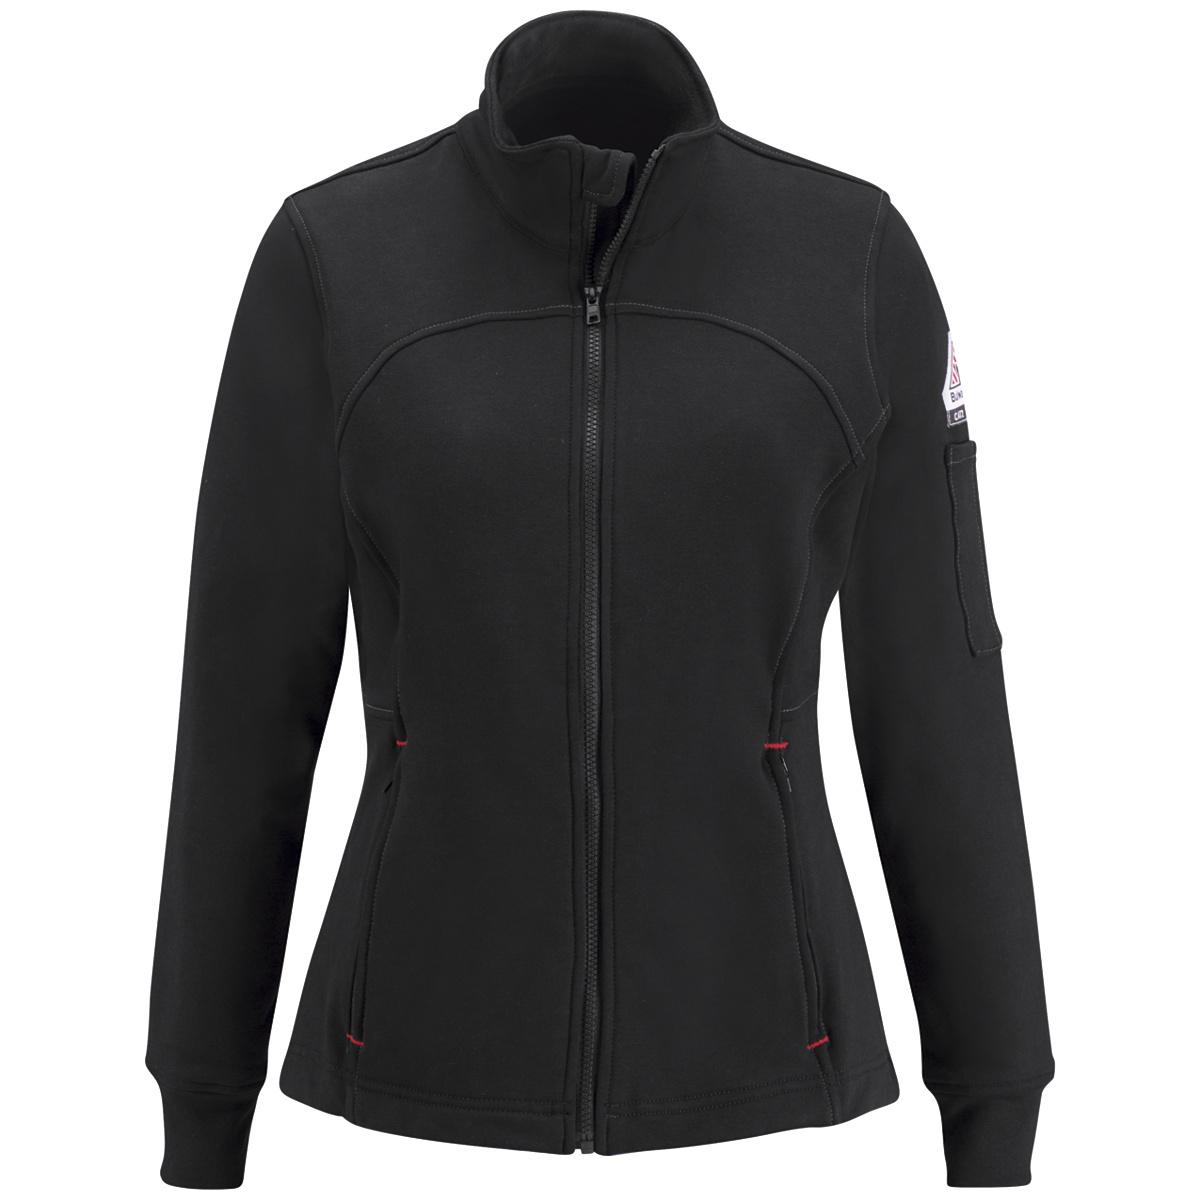 Bulwark® X-Large Regular Black Cotton/Spandex Flame Resistant Jacket With Zipper Front Closure